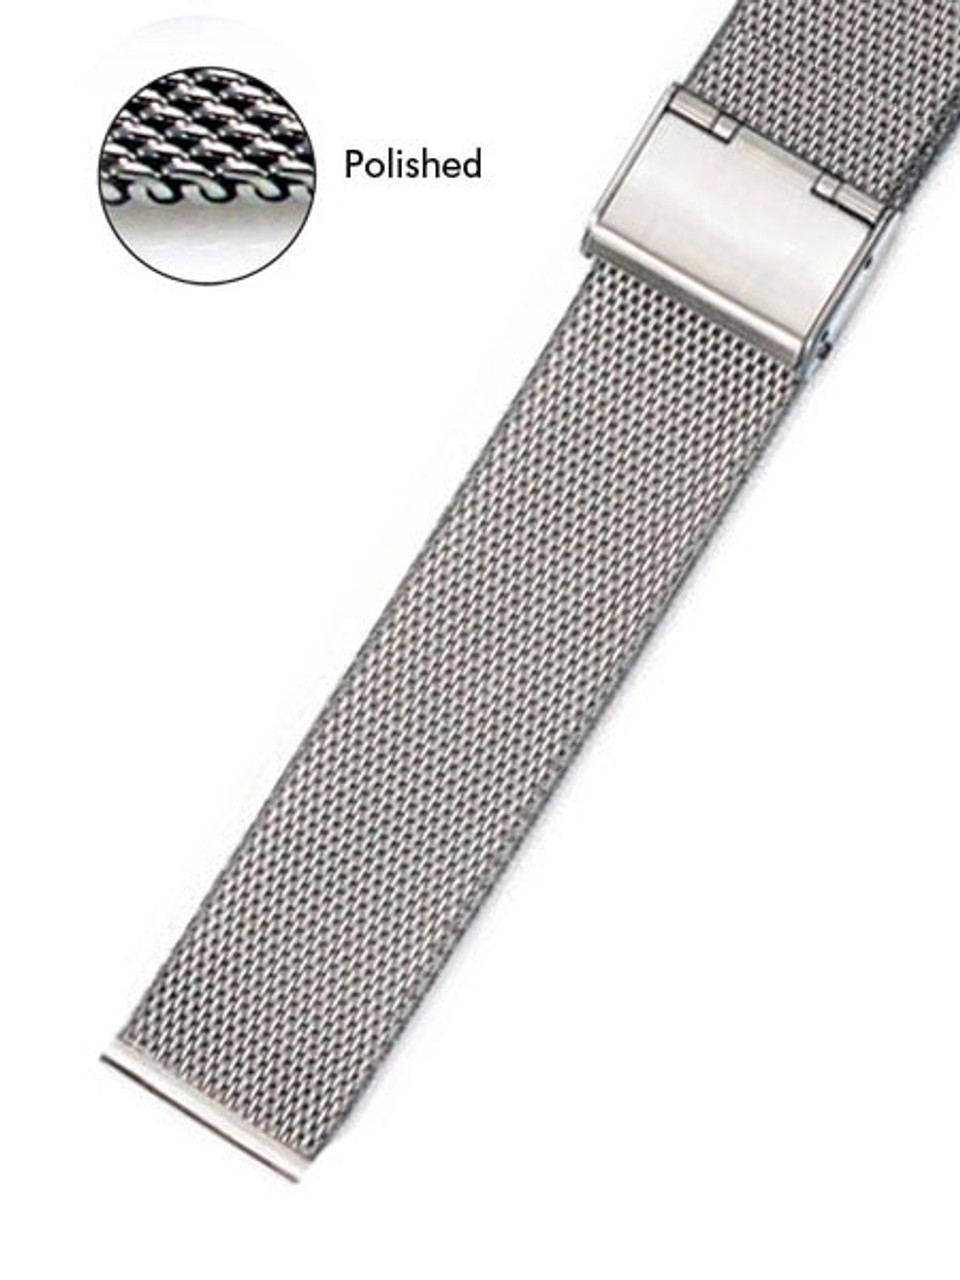 Vollmer Polished Mesh Bracelet with Deployant Clasp #90460H4 (20mm)